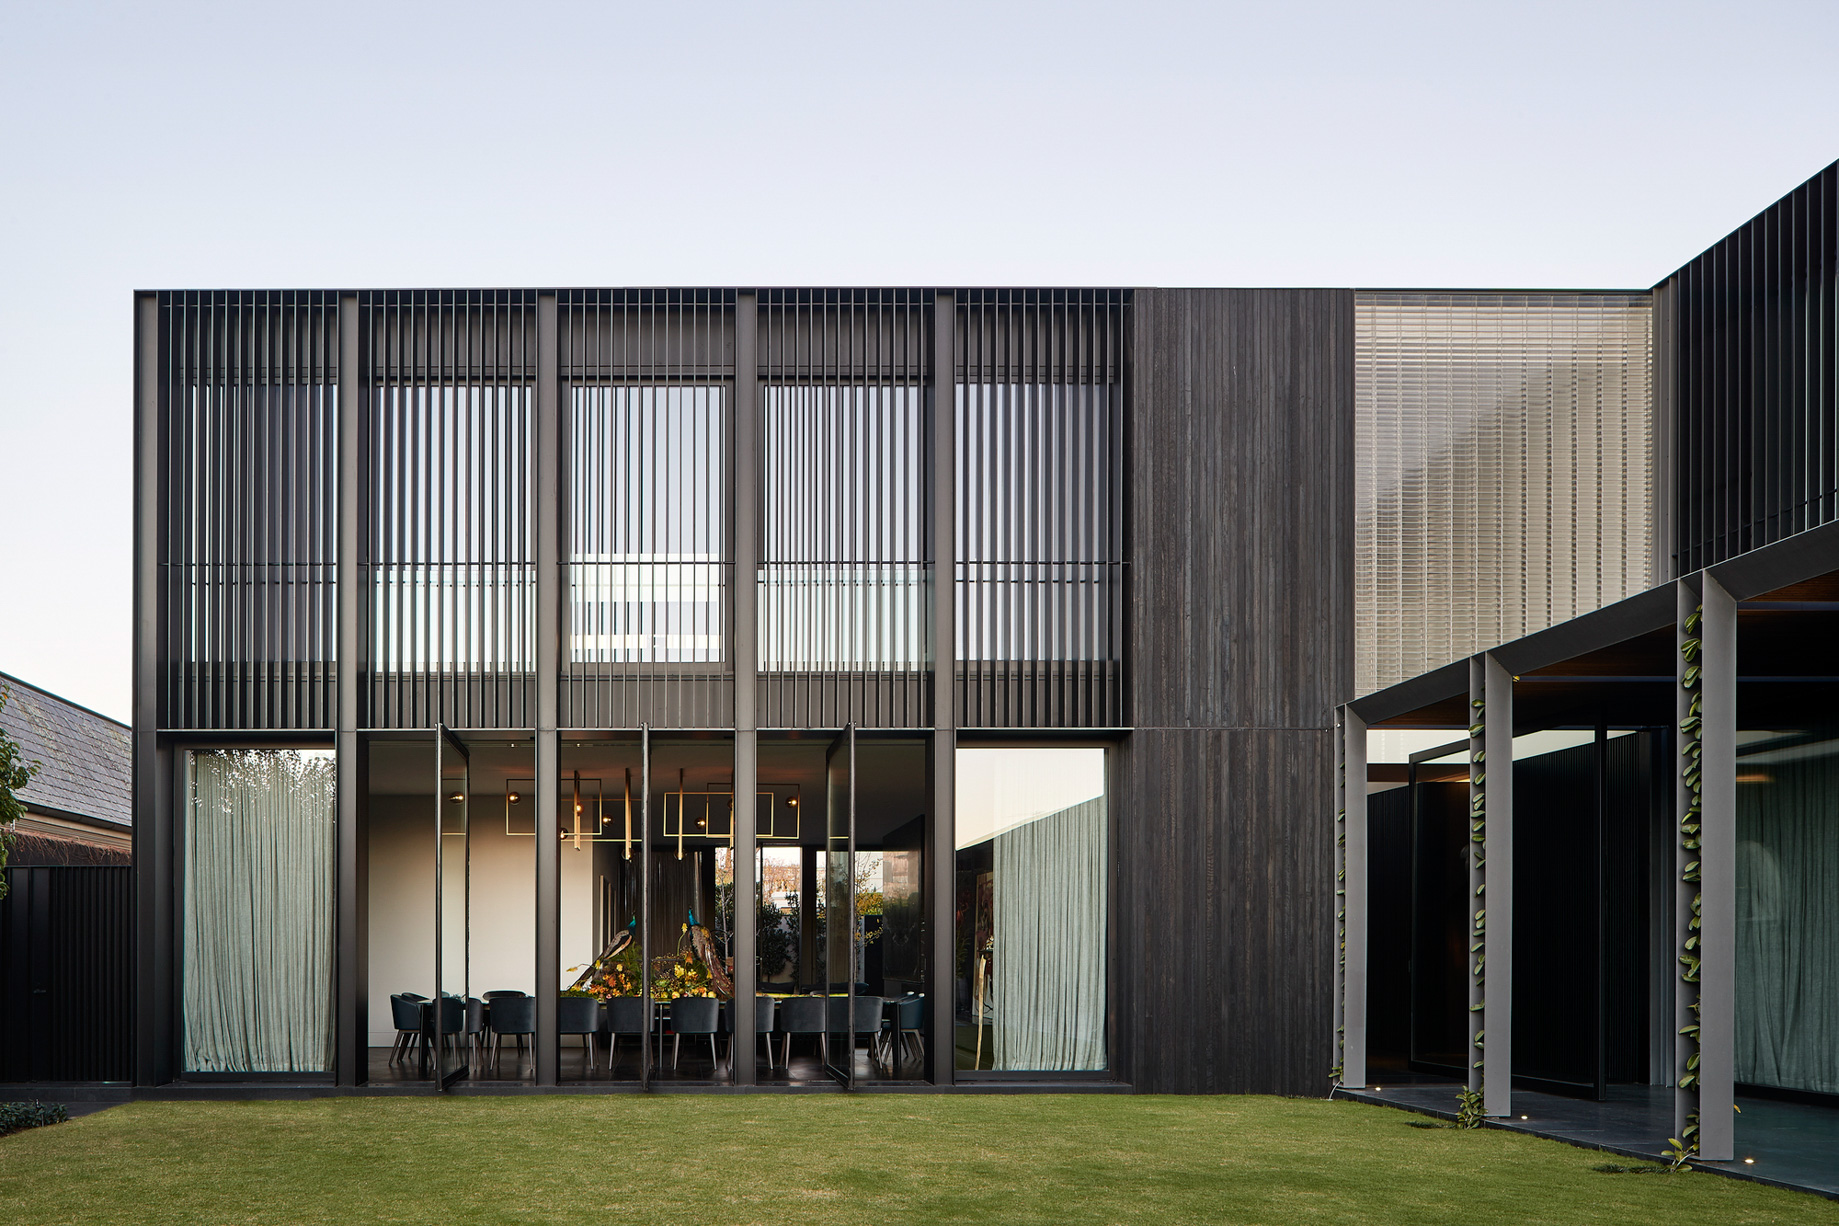 Ottawa Road Modern Residence – Toorak, Melbourne, Australia